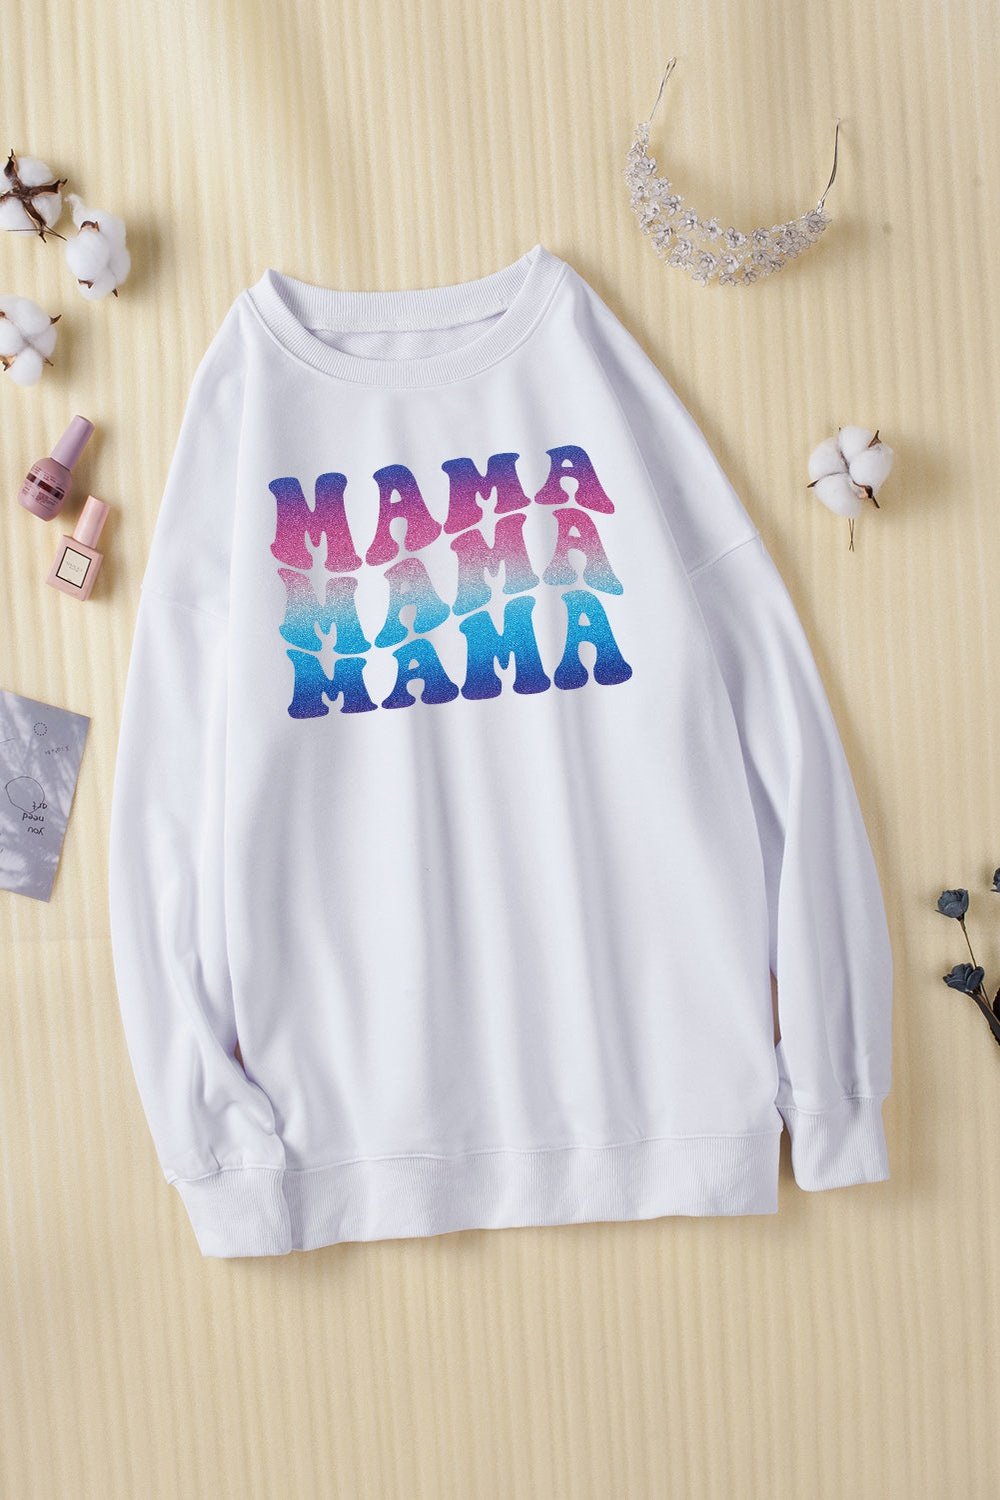 MAMA Gradient Graphic Dropped Shoulder Sweatshirt - Sweatshirts & Hoodies - FITGGINS